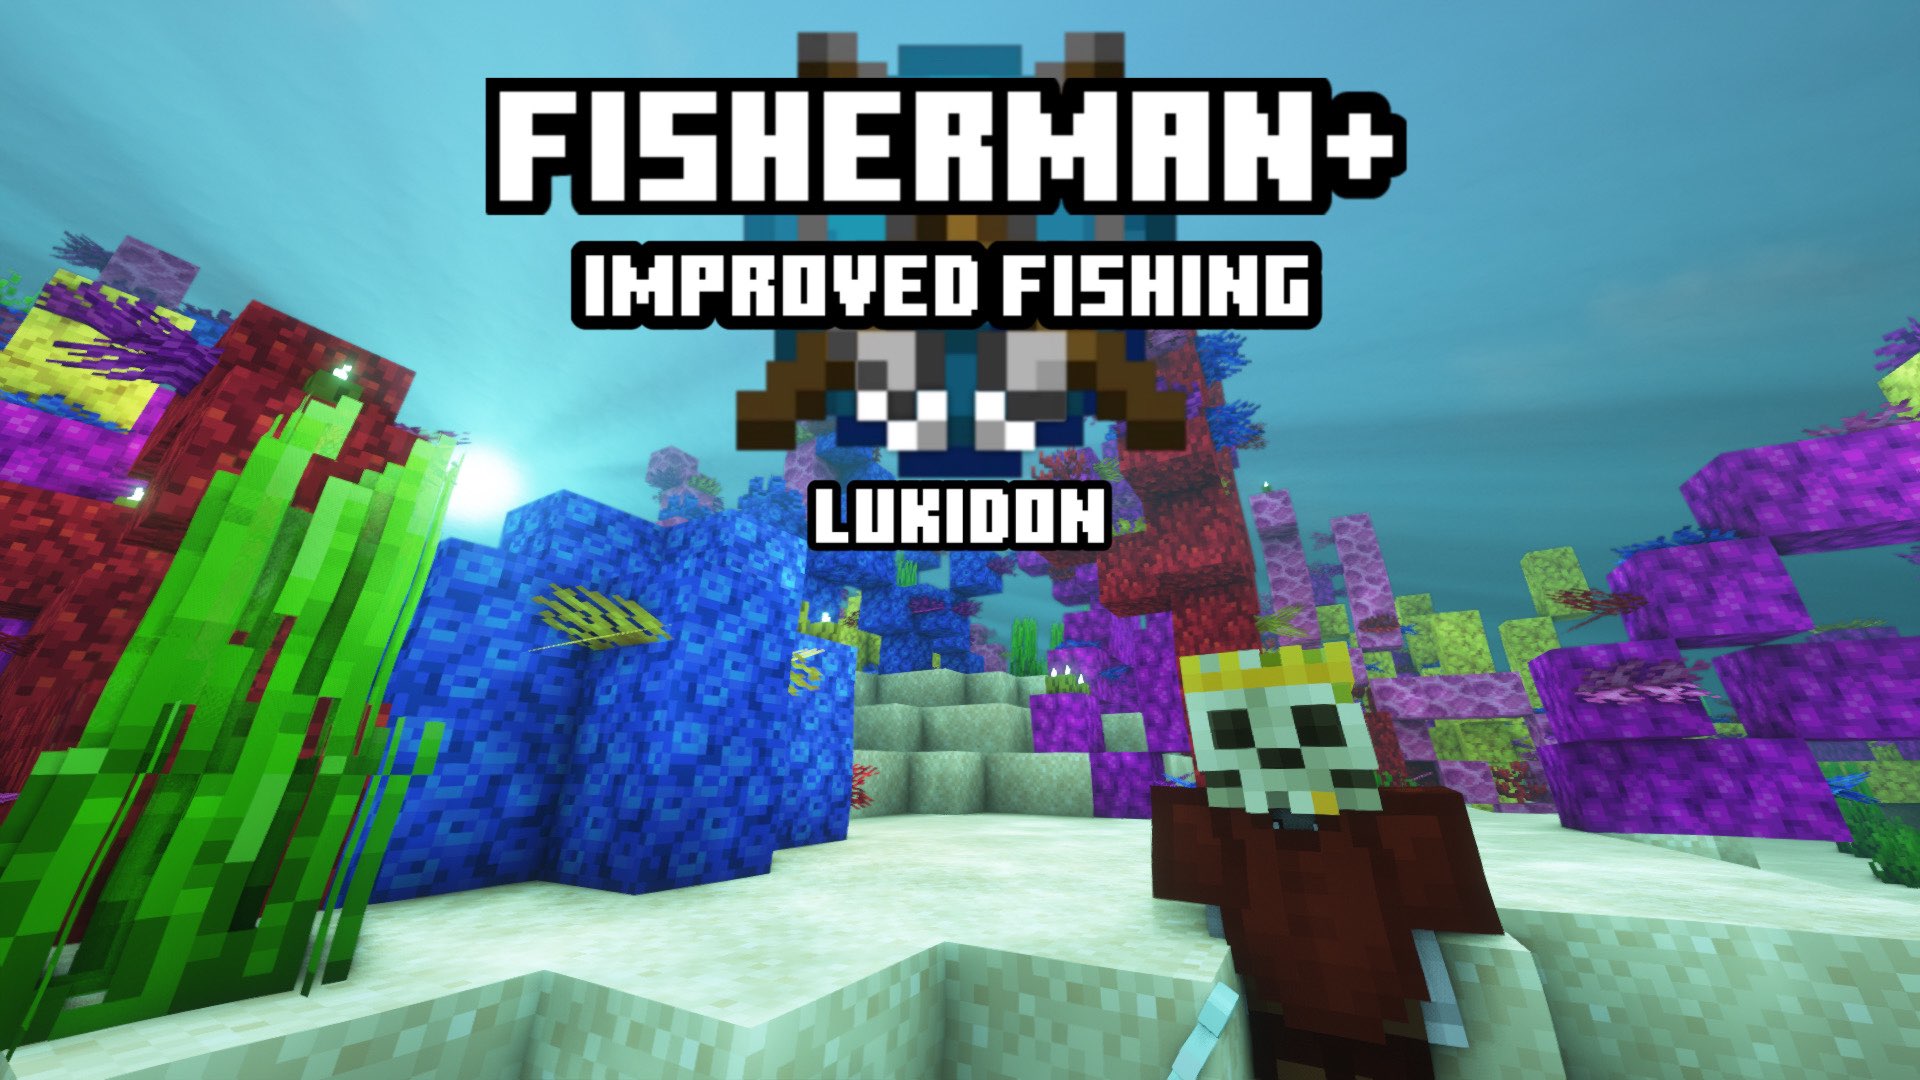 Fisherman+ - Sea Creatures & Improved Fishing screenshot 1